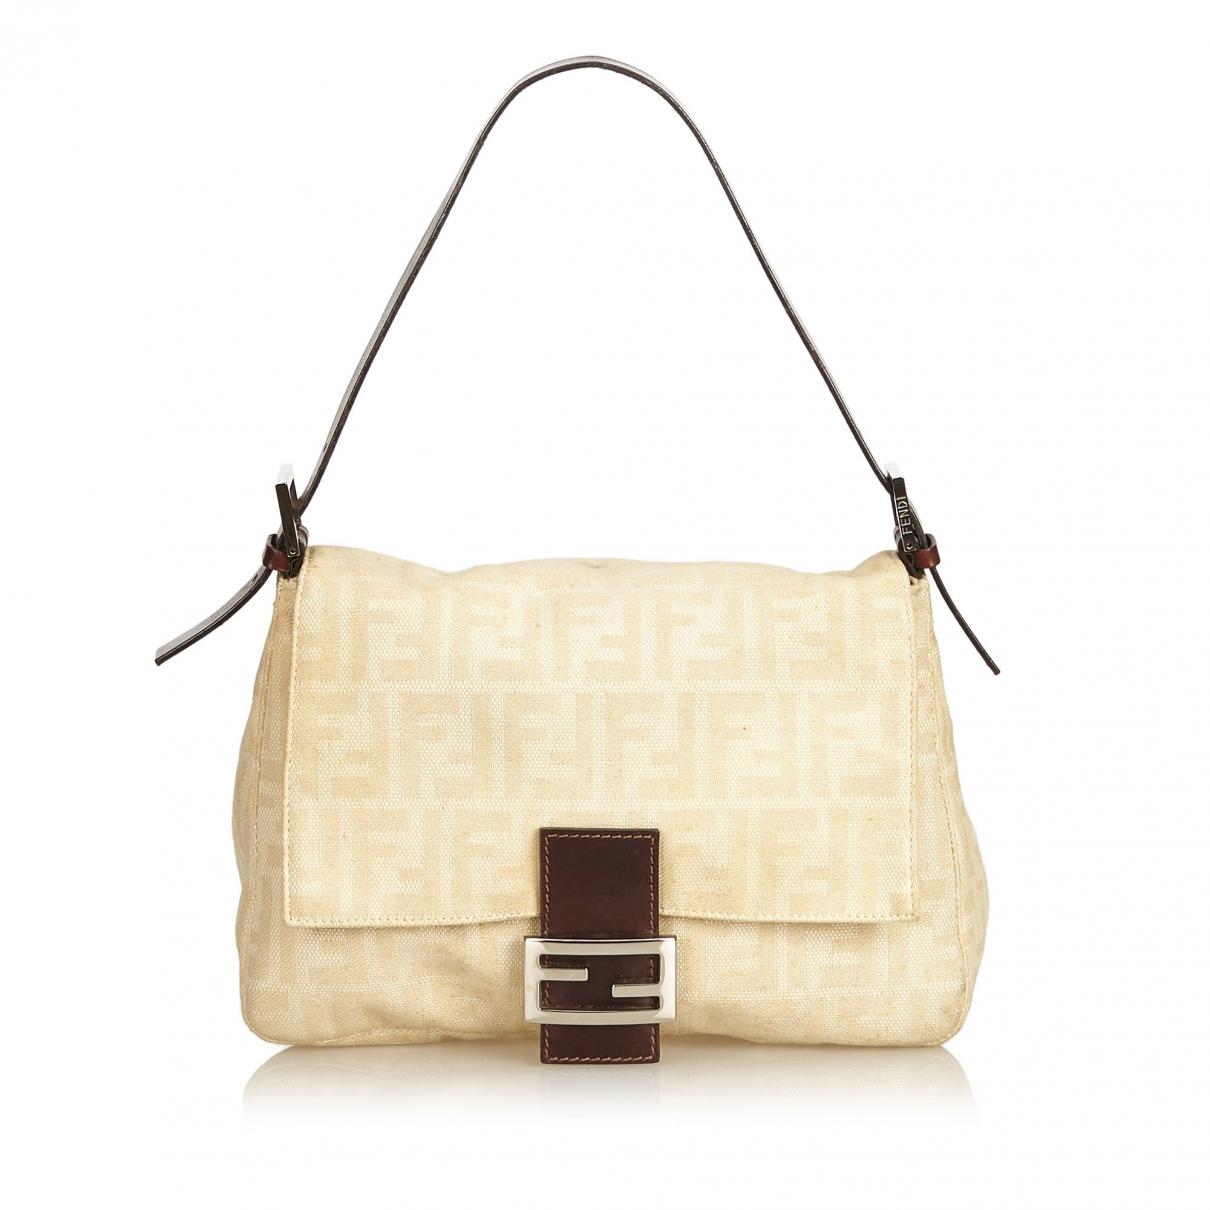 Lyst - Fendi Baguette Brown Cloth Handbag in Brown